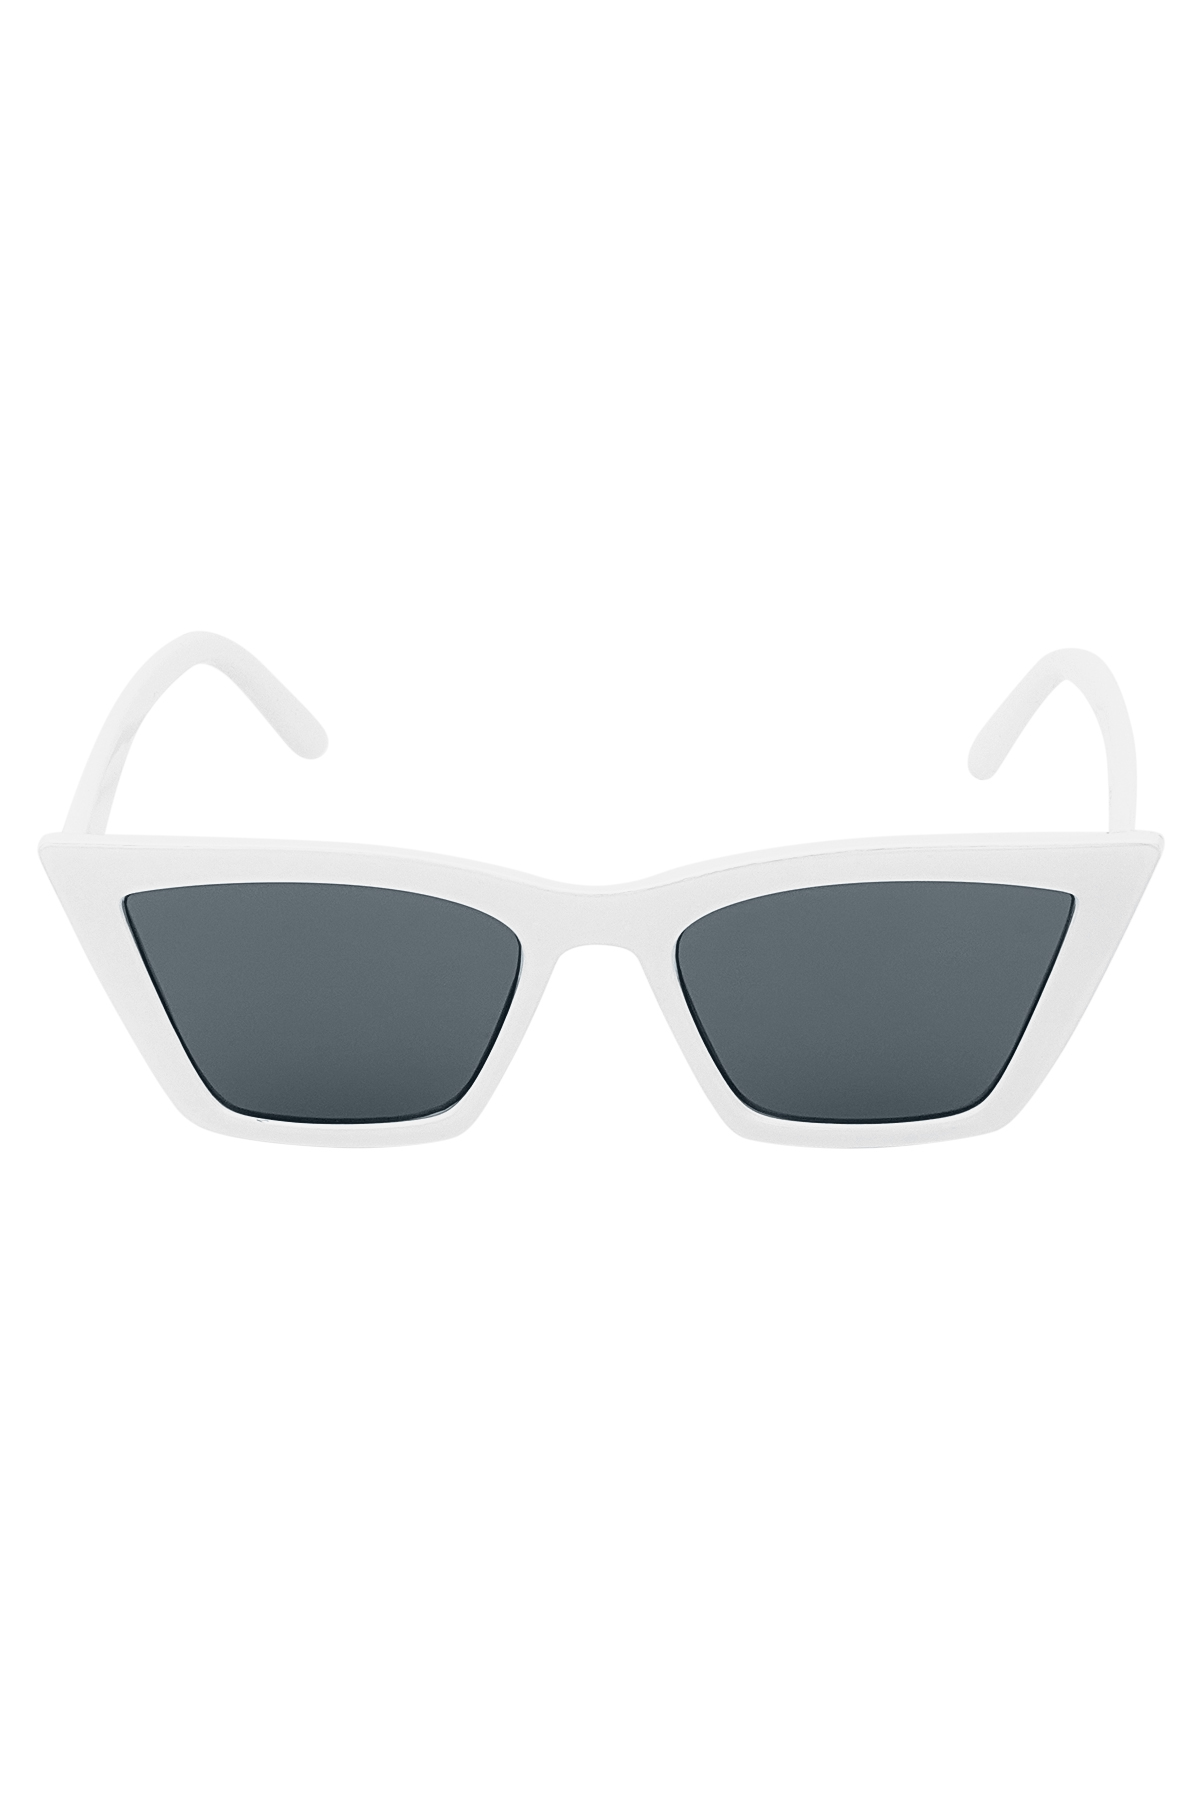 Monochrome cat eye sunglasses - black and white Picture5